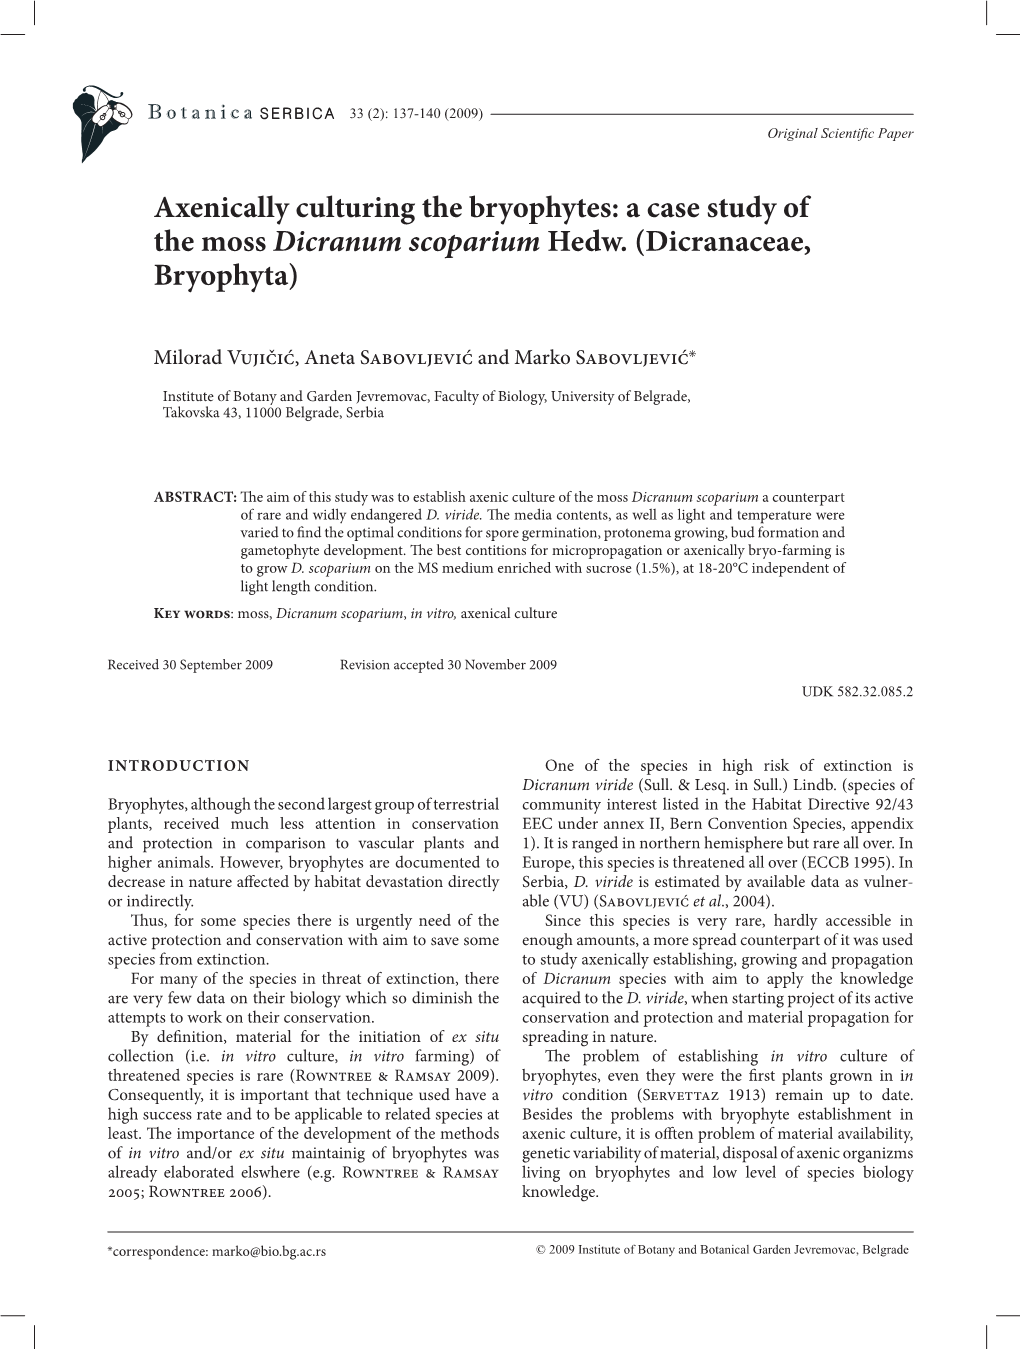 A Case Study of the Moss Dicranum Scoparium Hedw. (Dicranaceae, Bryophyta)